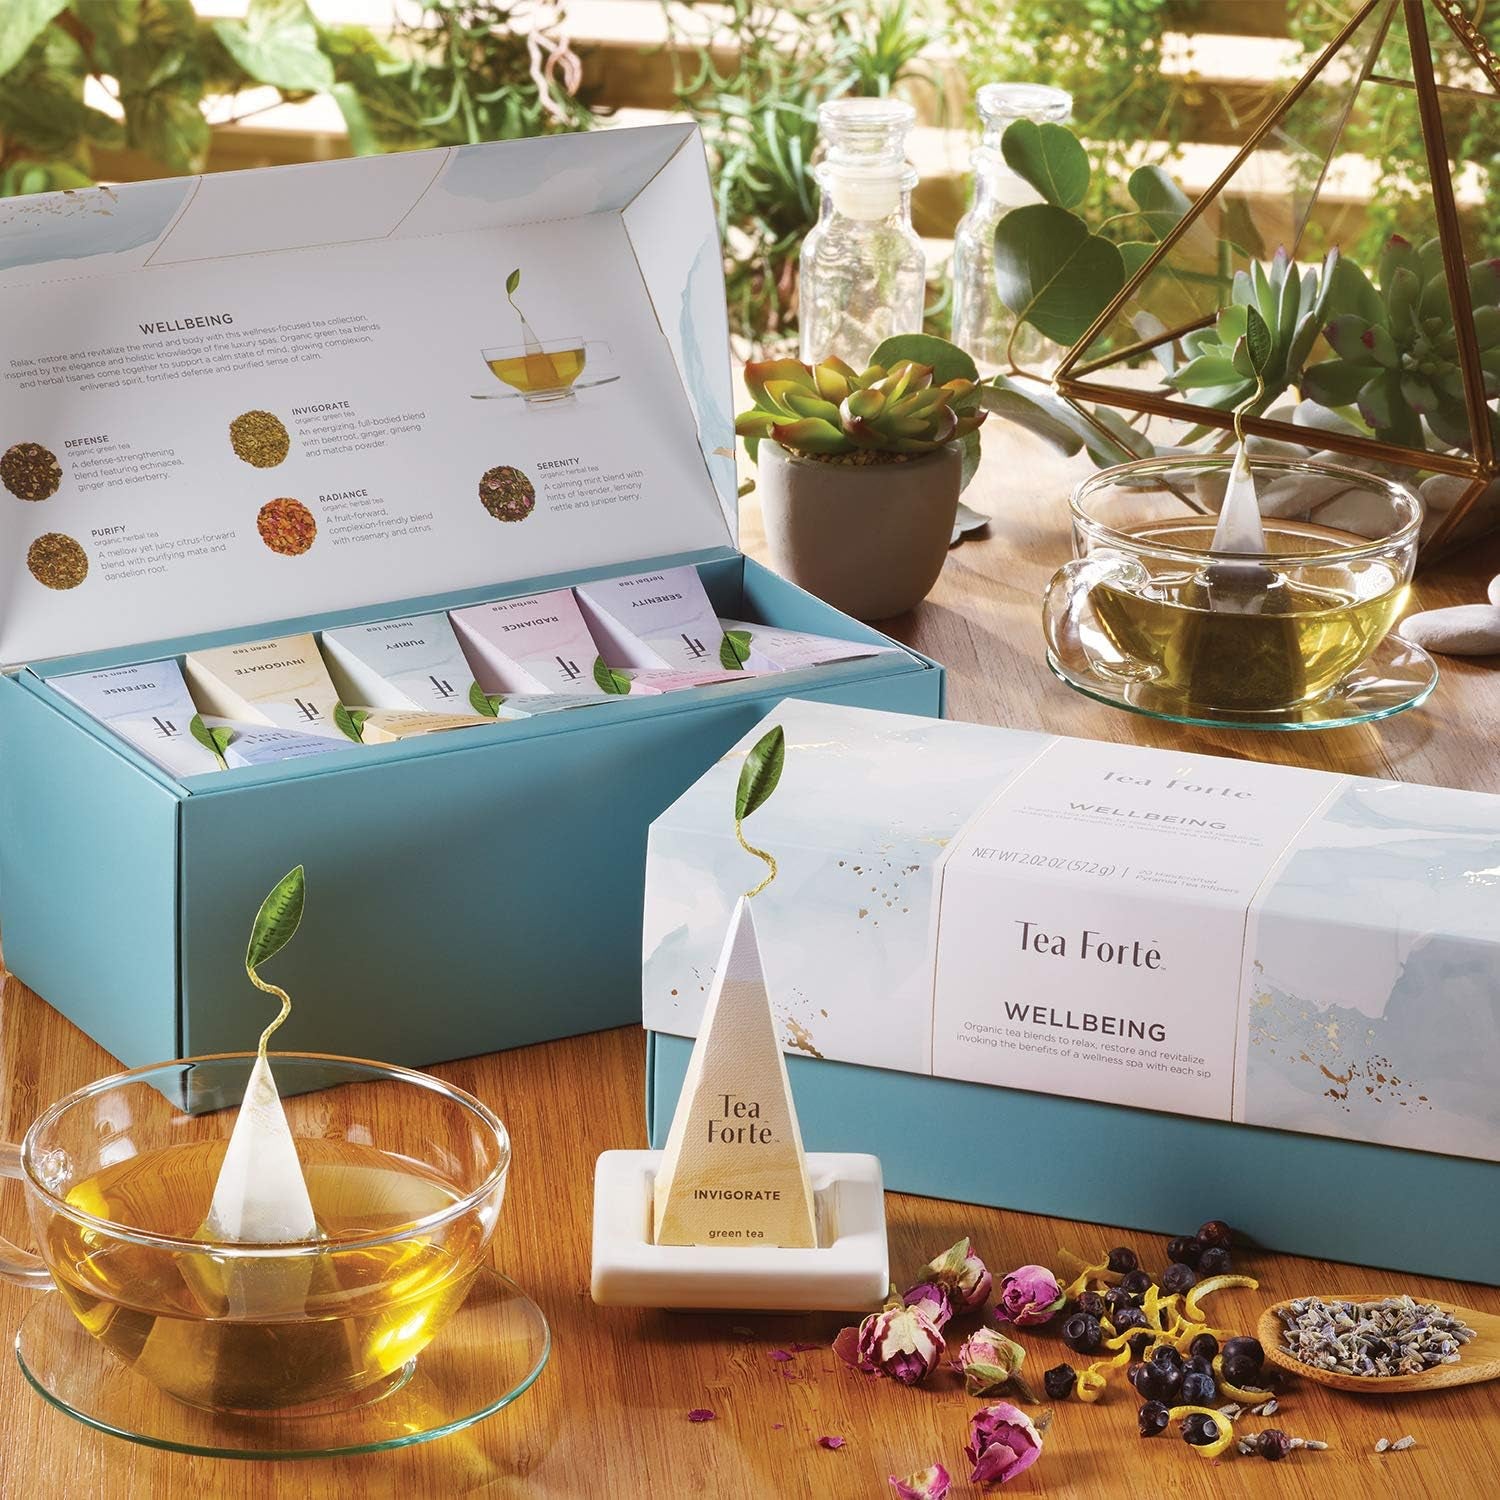 Wellbeing Organic Wellness Tea Presentation Box Tea Sampler Gift Set, 20 Assorted Variety Handcrafted Pyramid Tea Infuser Bags - Herbal Tea, Green Tea